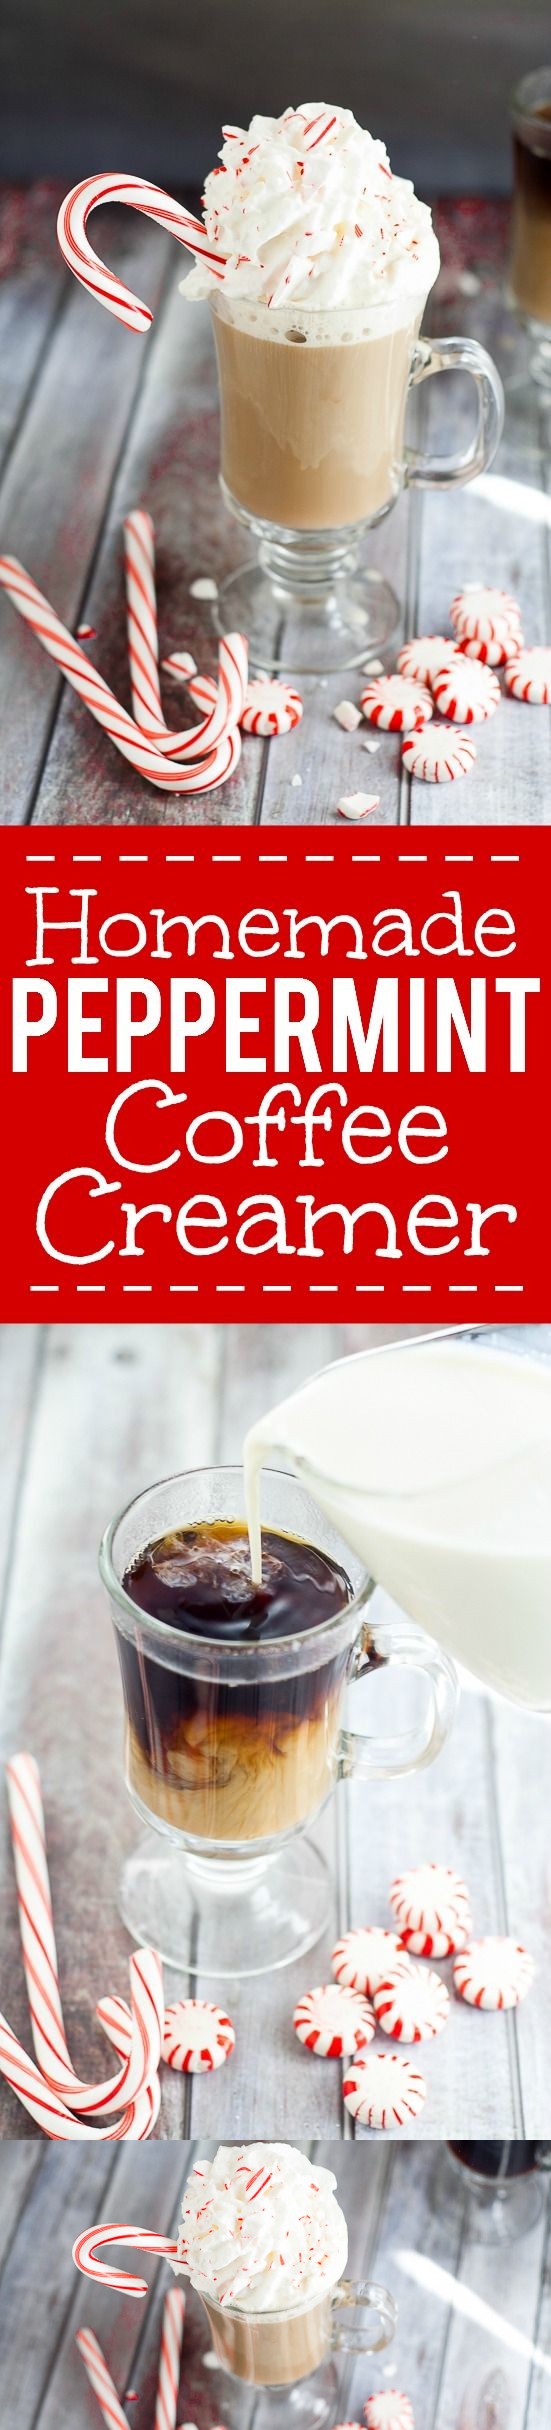 Peppermint Coffee Creamer